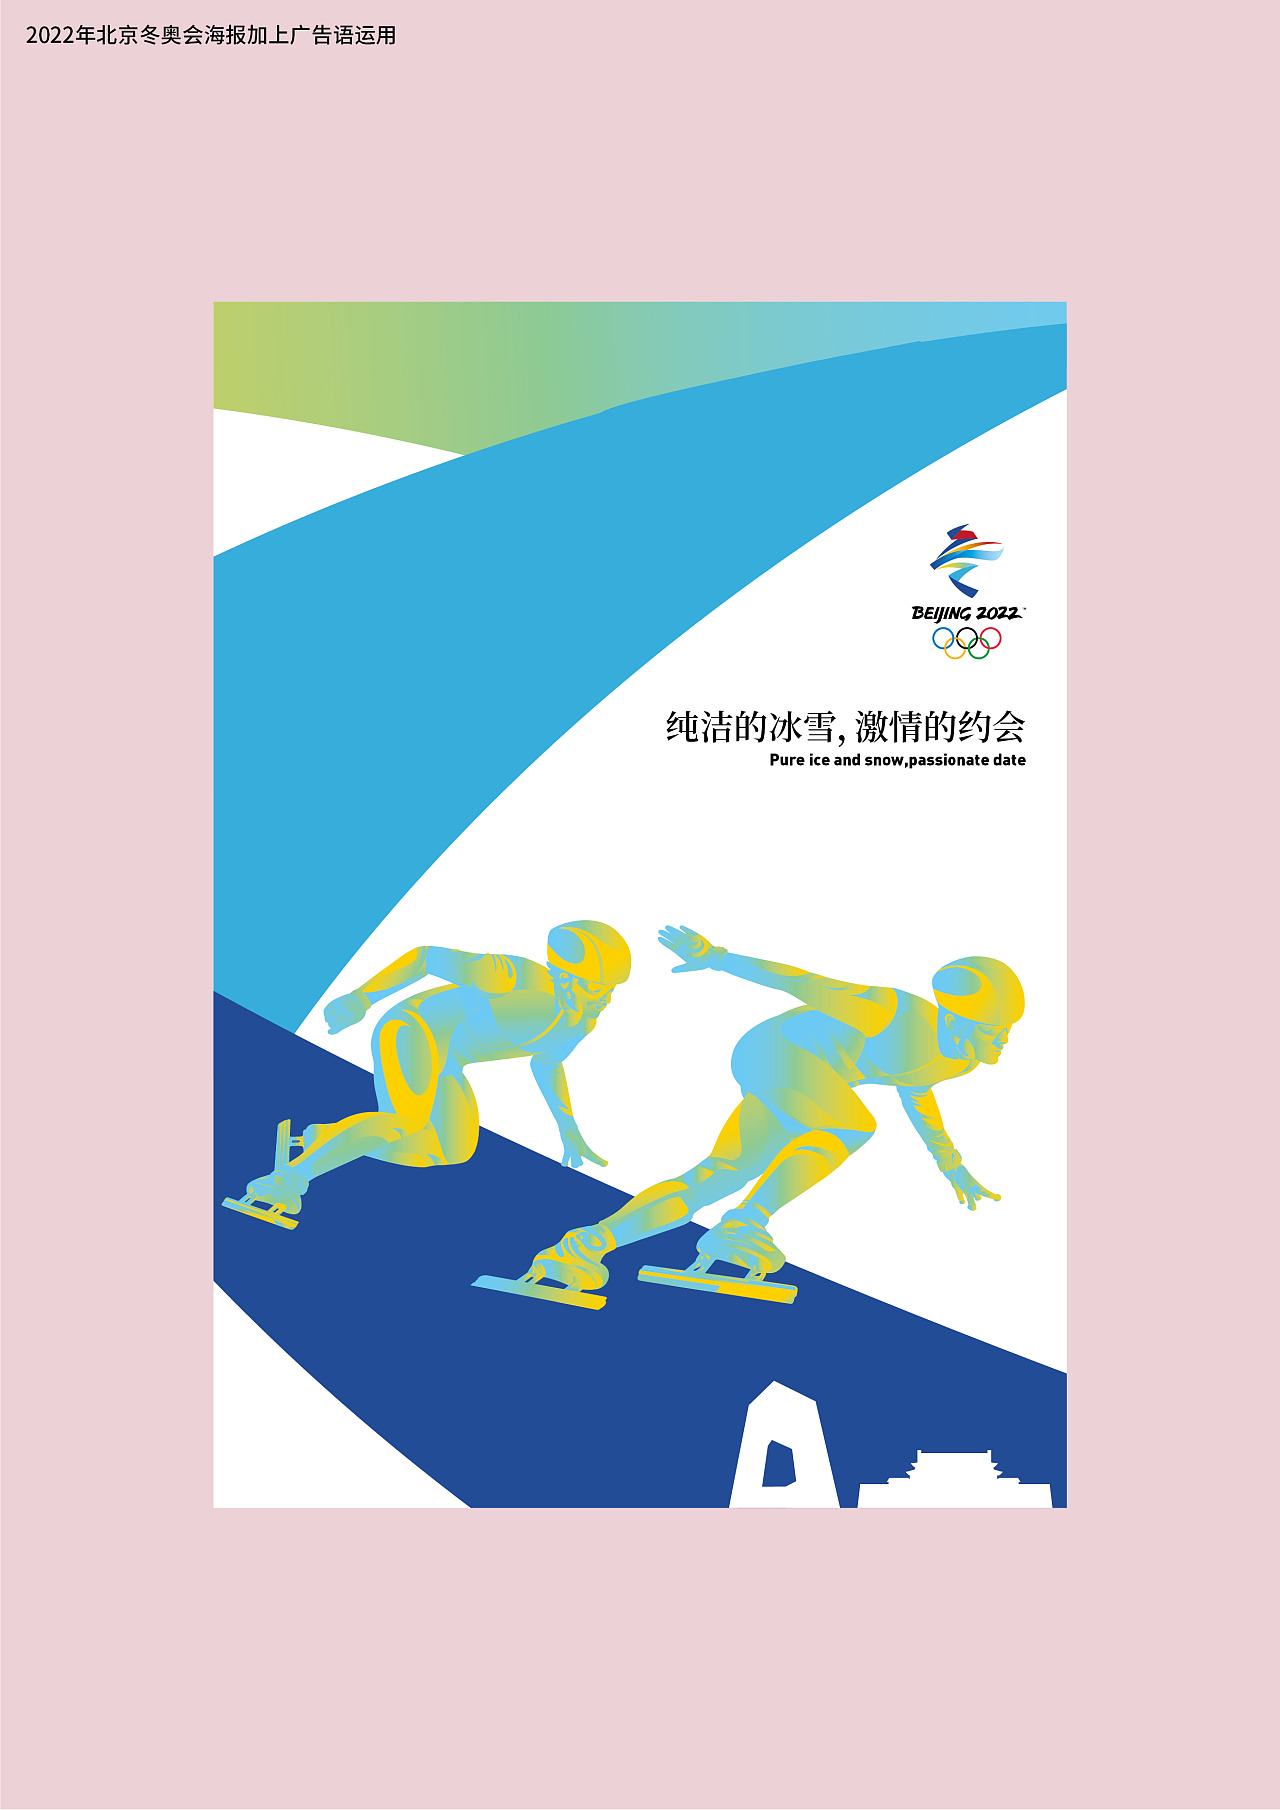 BG大游:北京冬奥组委宣传海报确定11组优秀设计作品为北京2022年